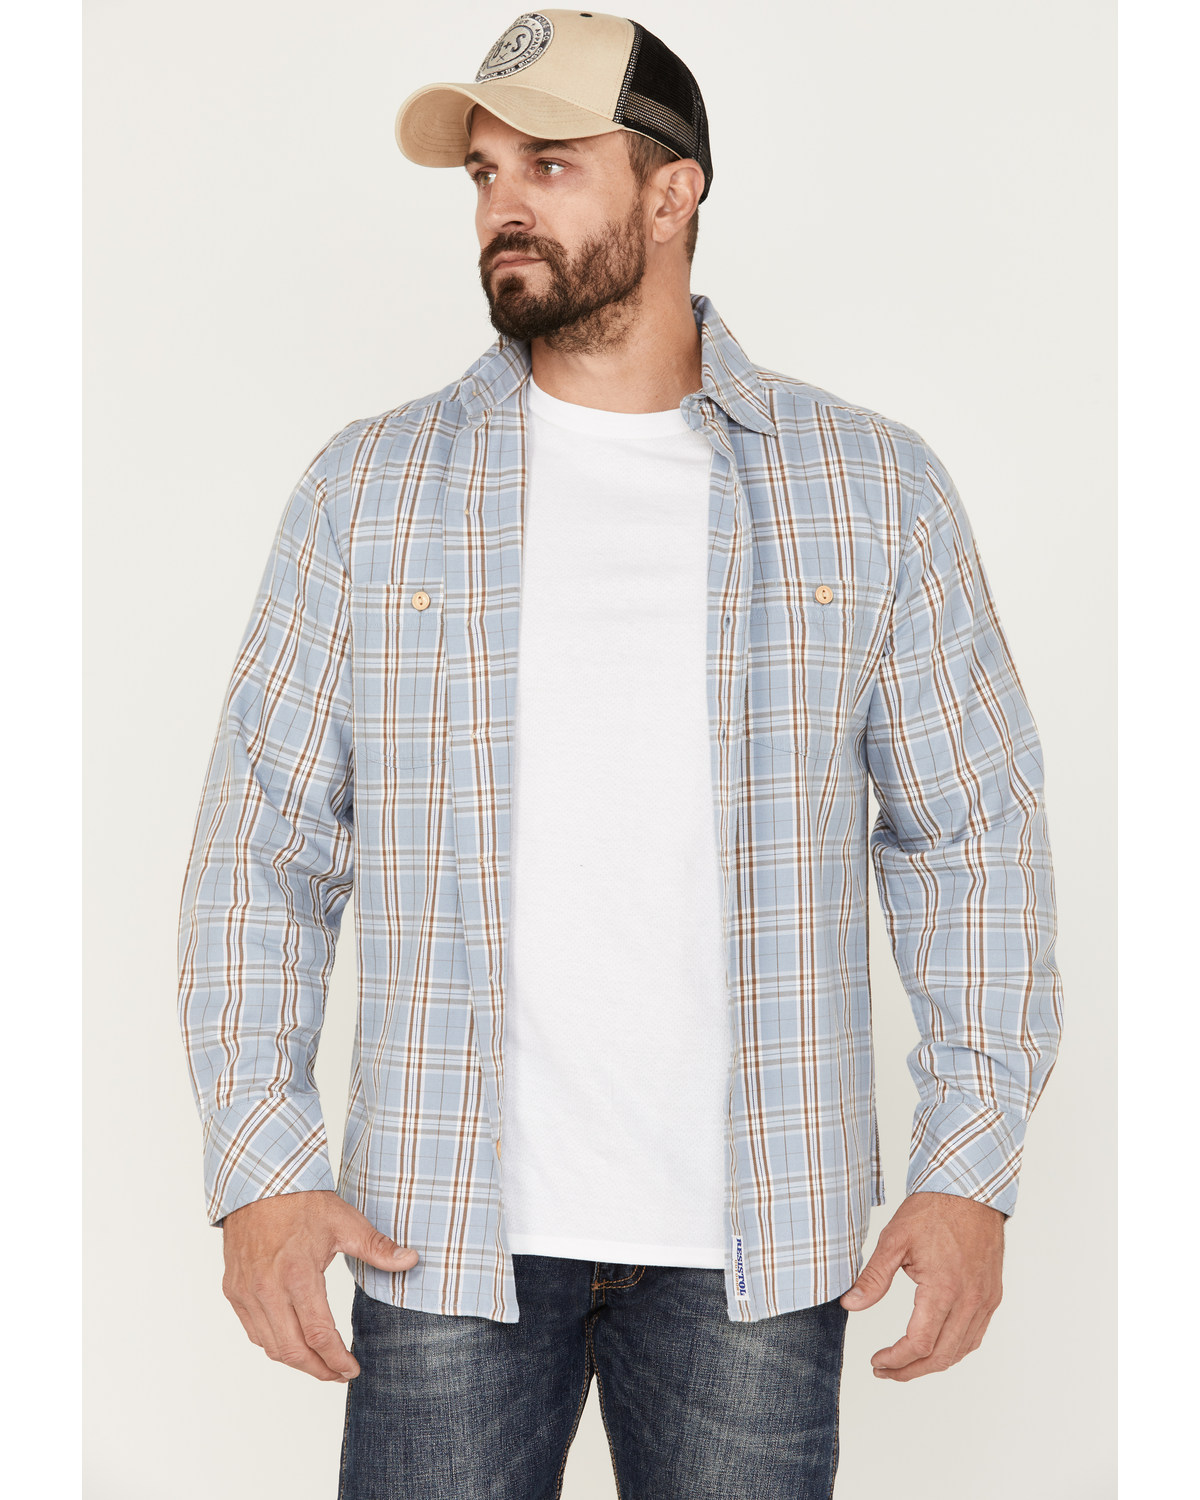 Resistol Men's Dakota Medium Plaid Print Long Sleeve Button Down Shirt